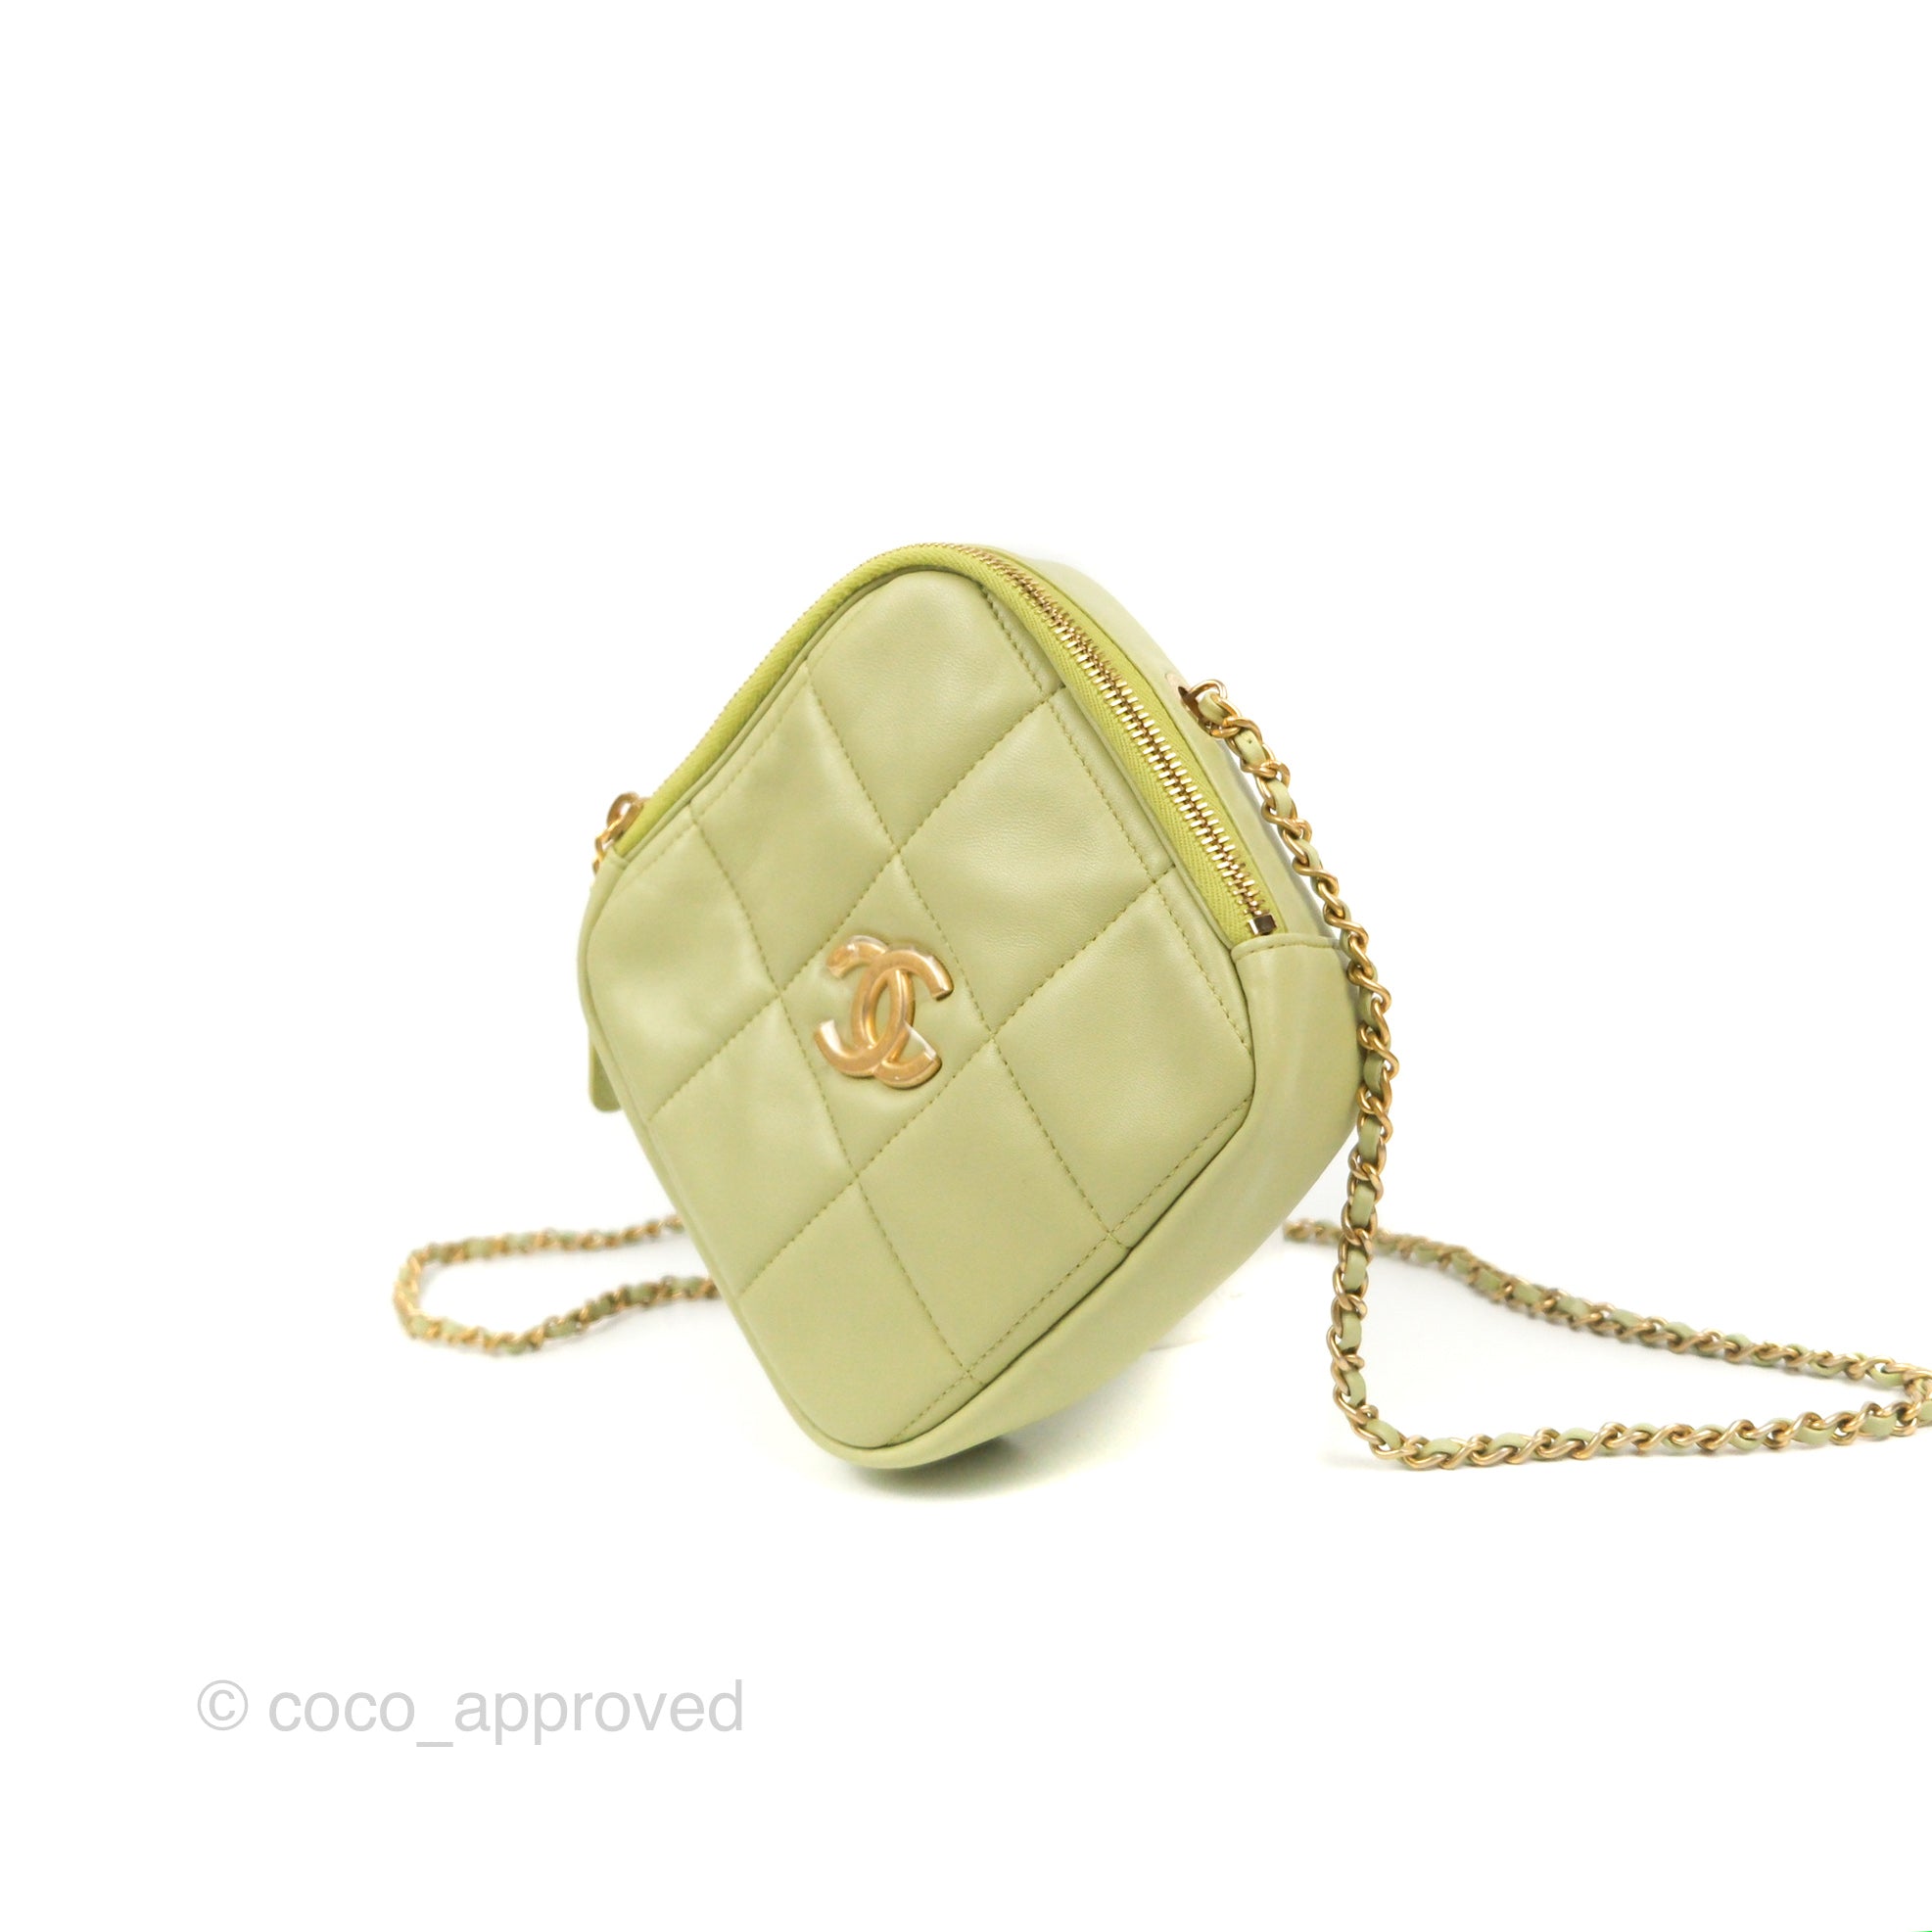 chanel diamond handbag